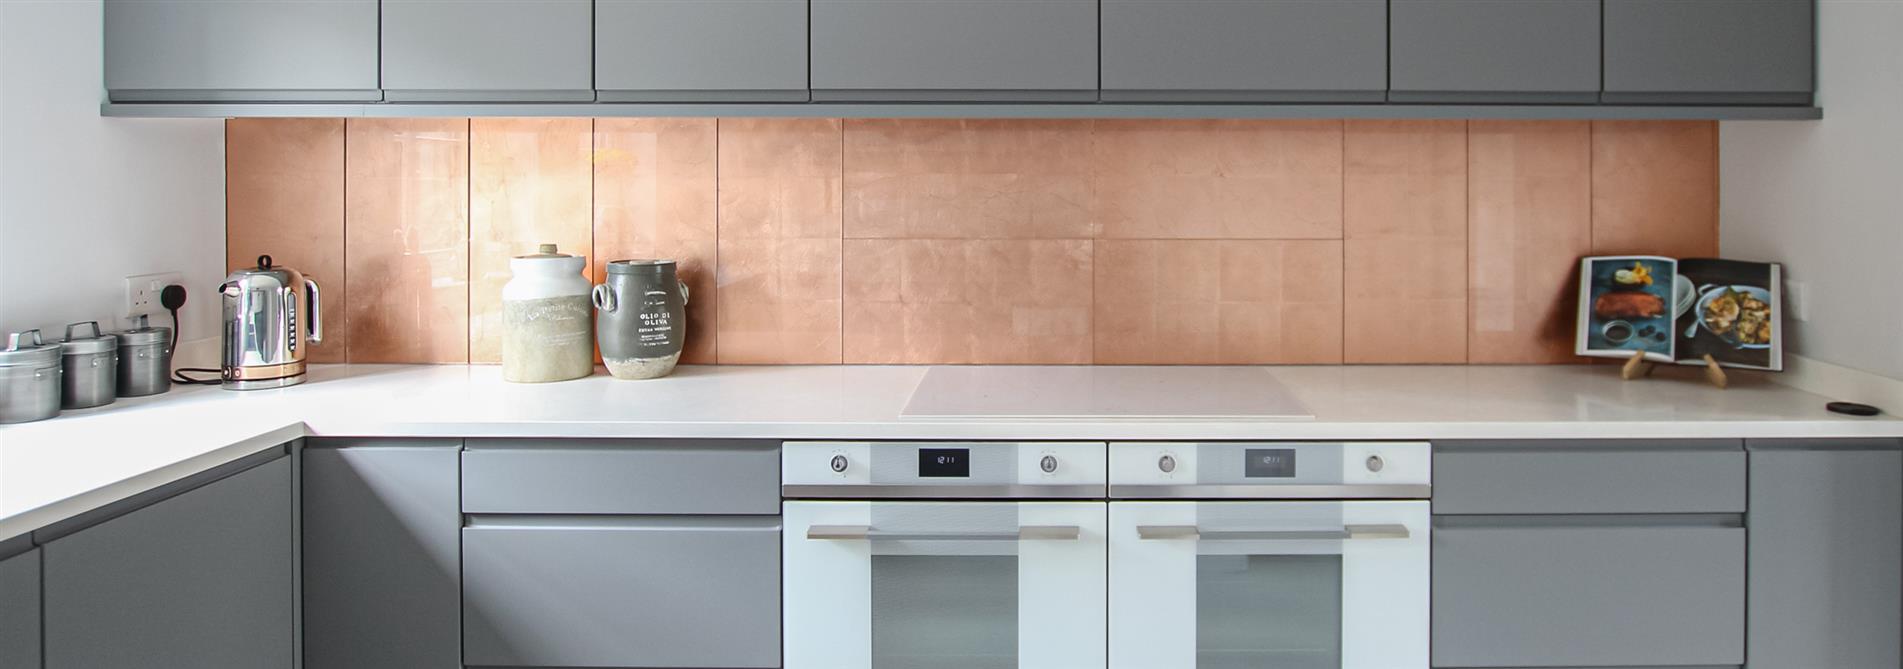 modern kitchen copper tiles